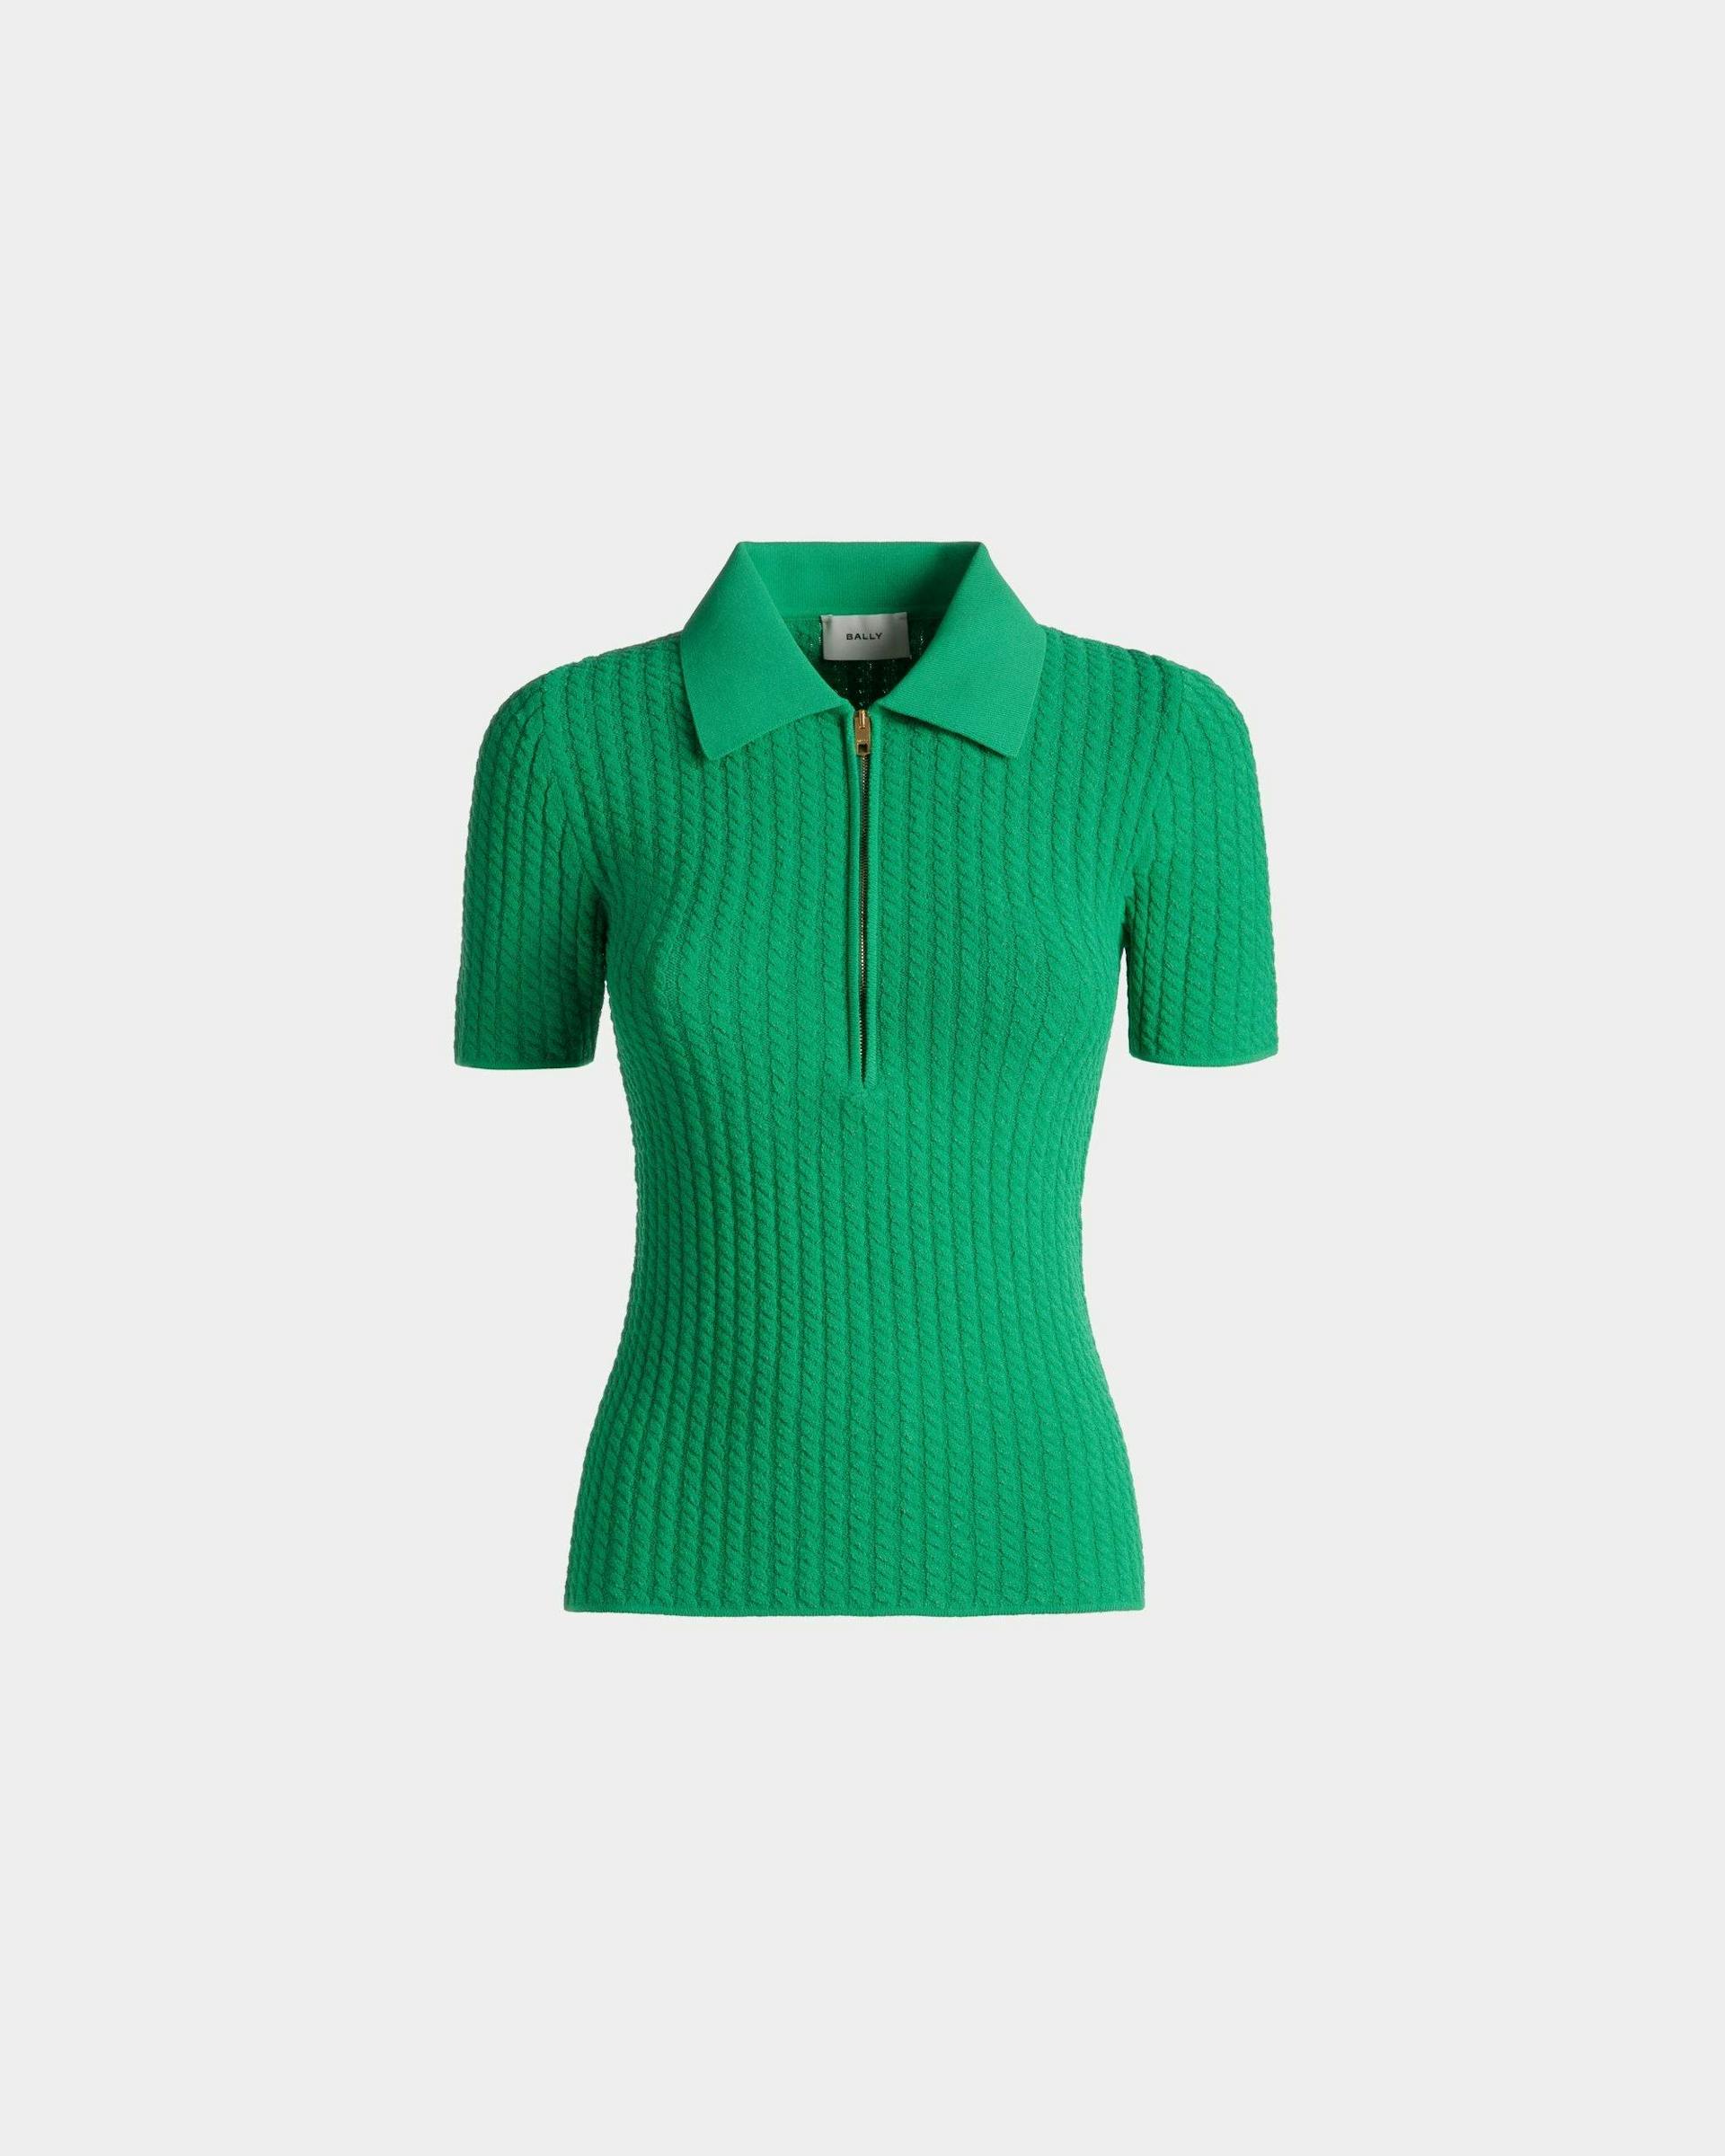 Women's Half Zip Polo Shirt in Knit Fabric | Bally | Still Life Front